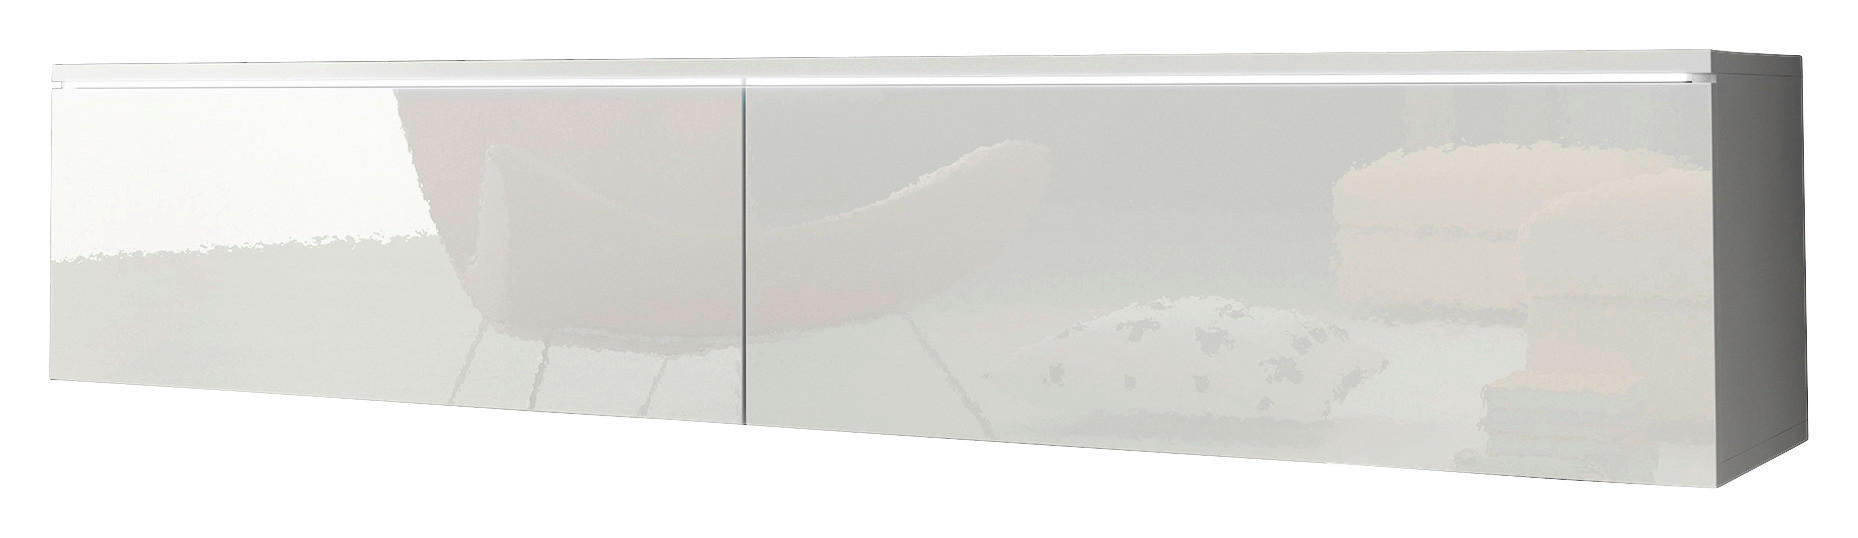 LOWBOARD Weiß Hochglanz  - Weiß Hochglanz/Weiß, LIFESTYLE, Kunststoff (140/30/33cm) - P & B